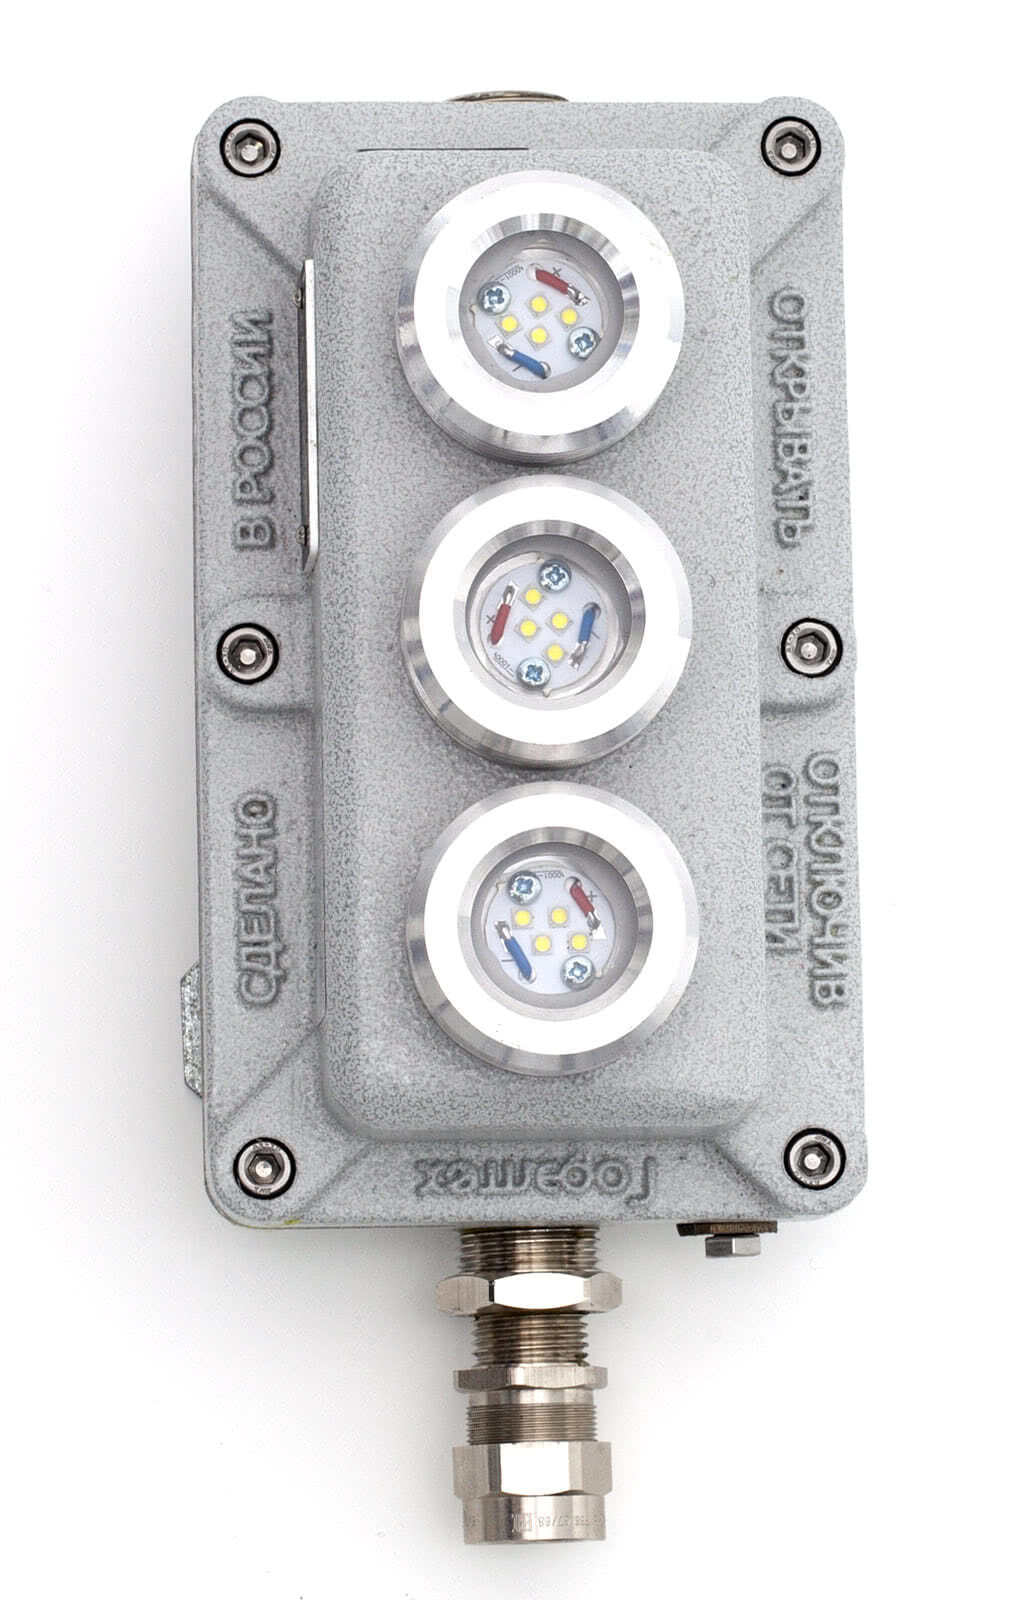 Explosion-proof small-sized LED light fixture SGM02-...S (CSE-STRECKE, CSE-STRECKE-U)